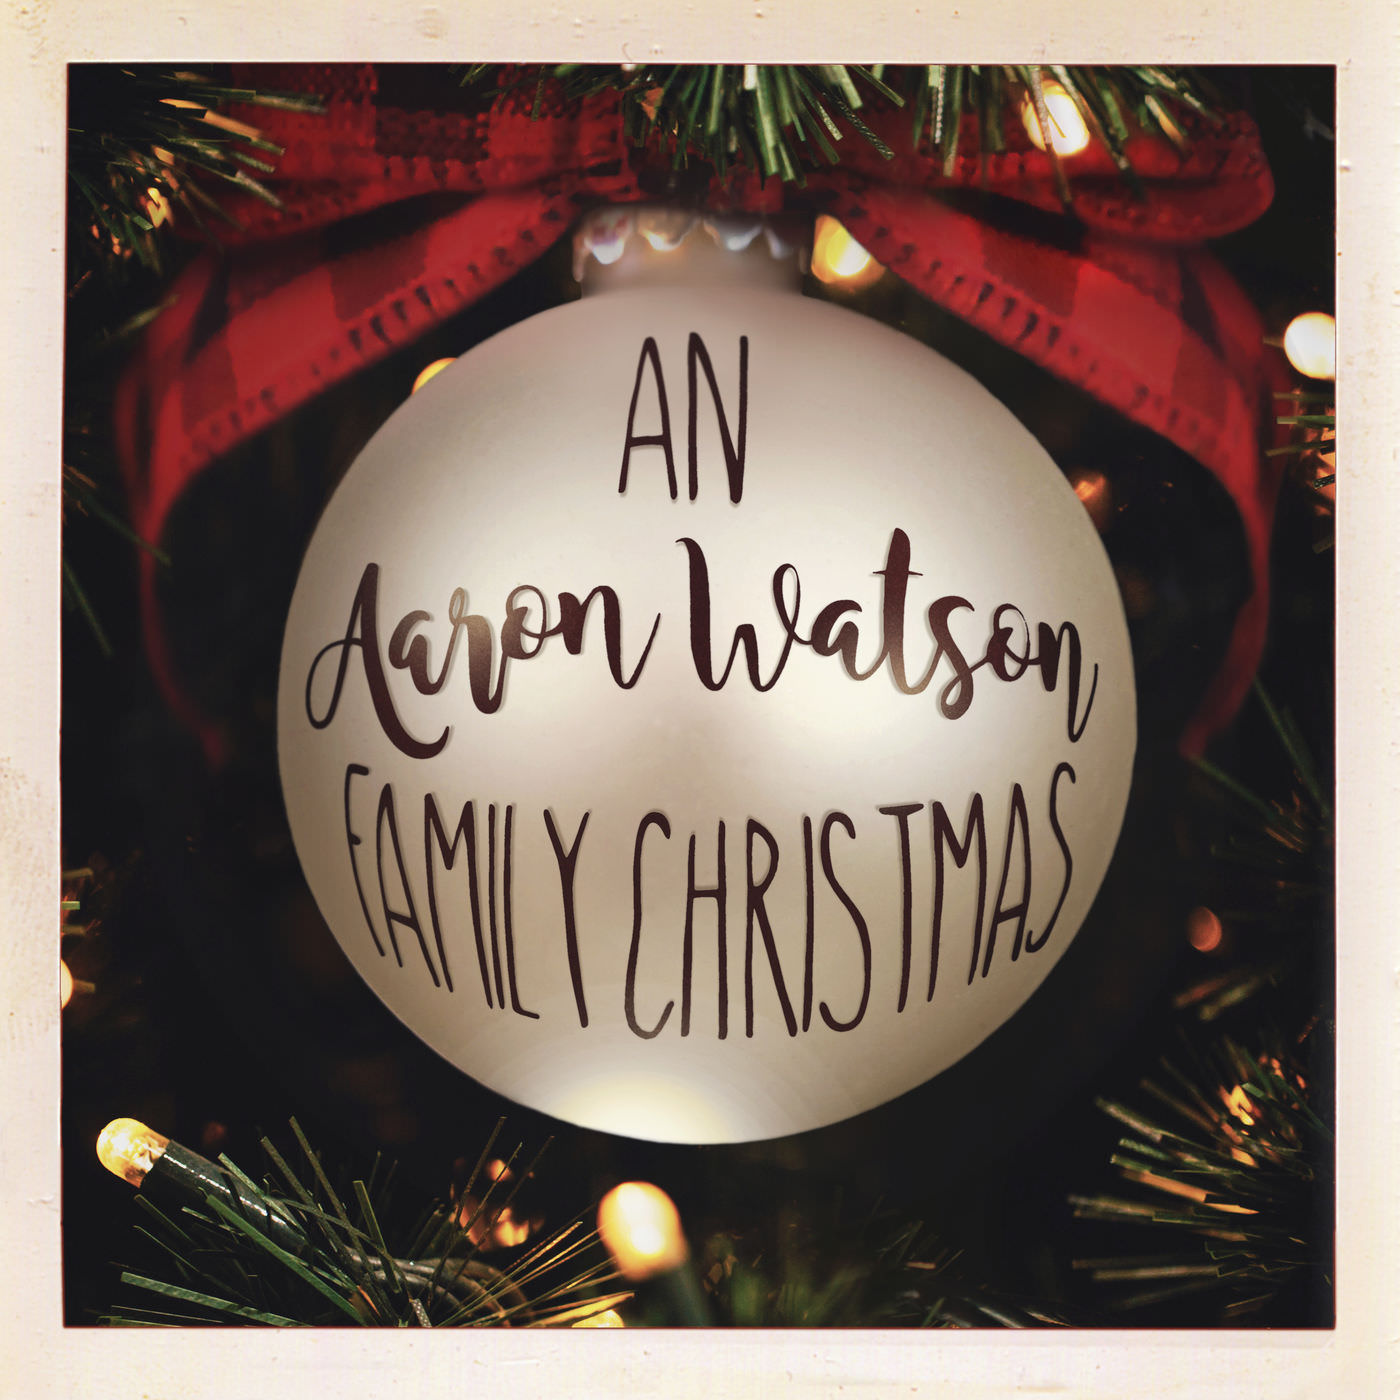 Aaron Watson - An Aaron Watson Family Christmas (2018) [FLAC 24bit/48kHz]